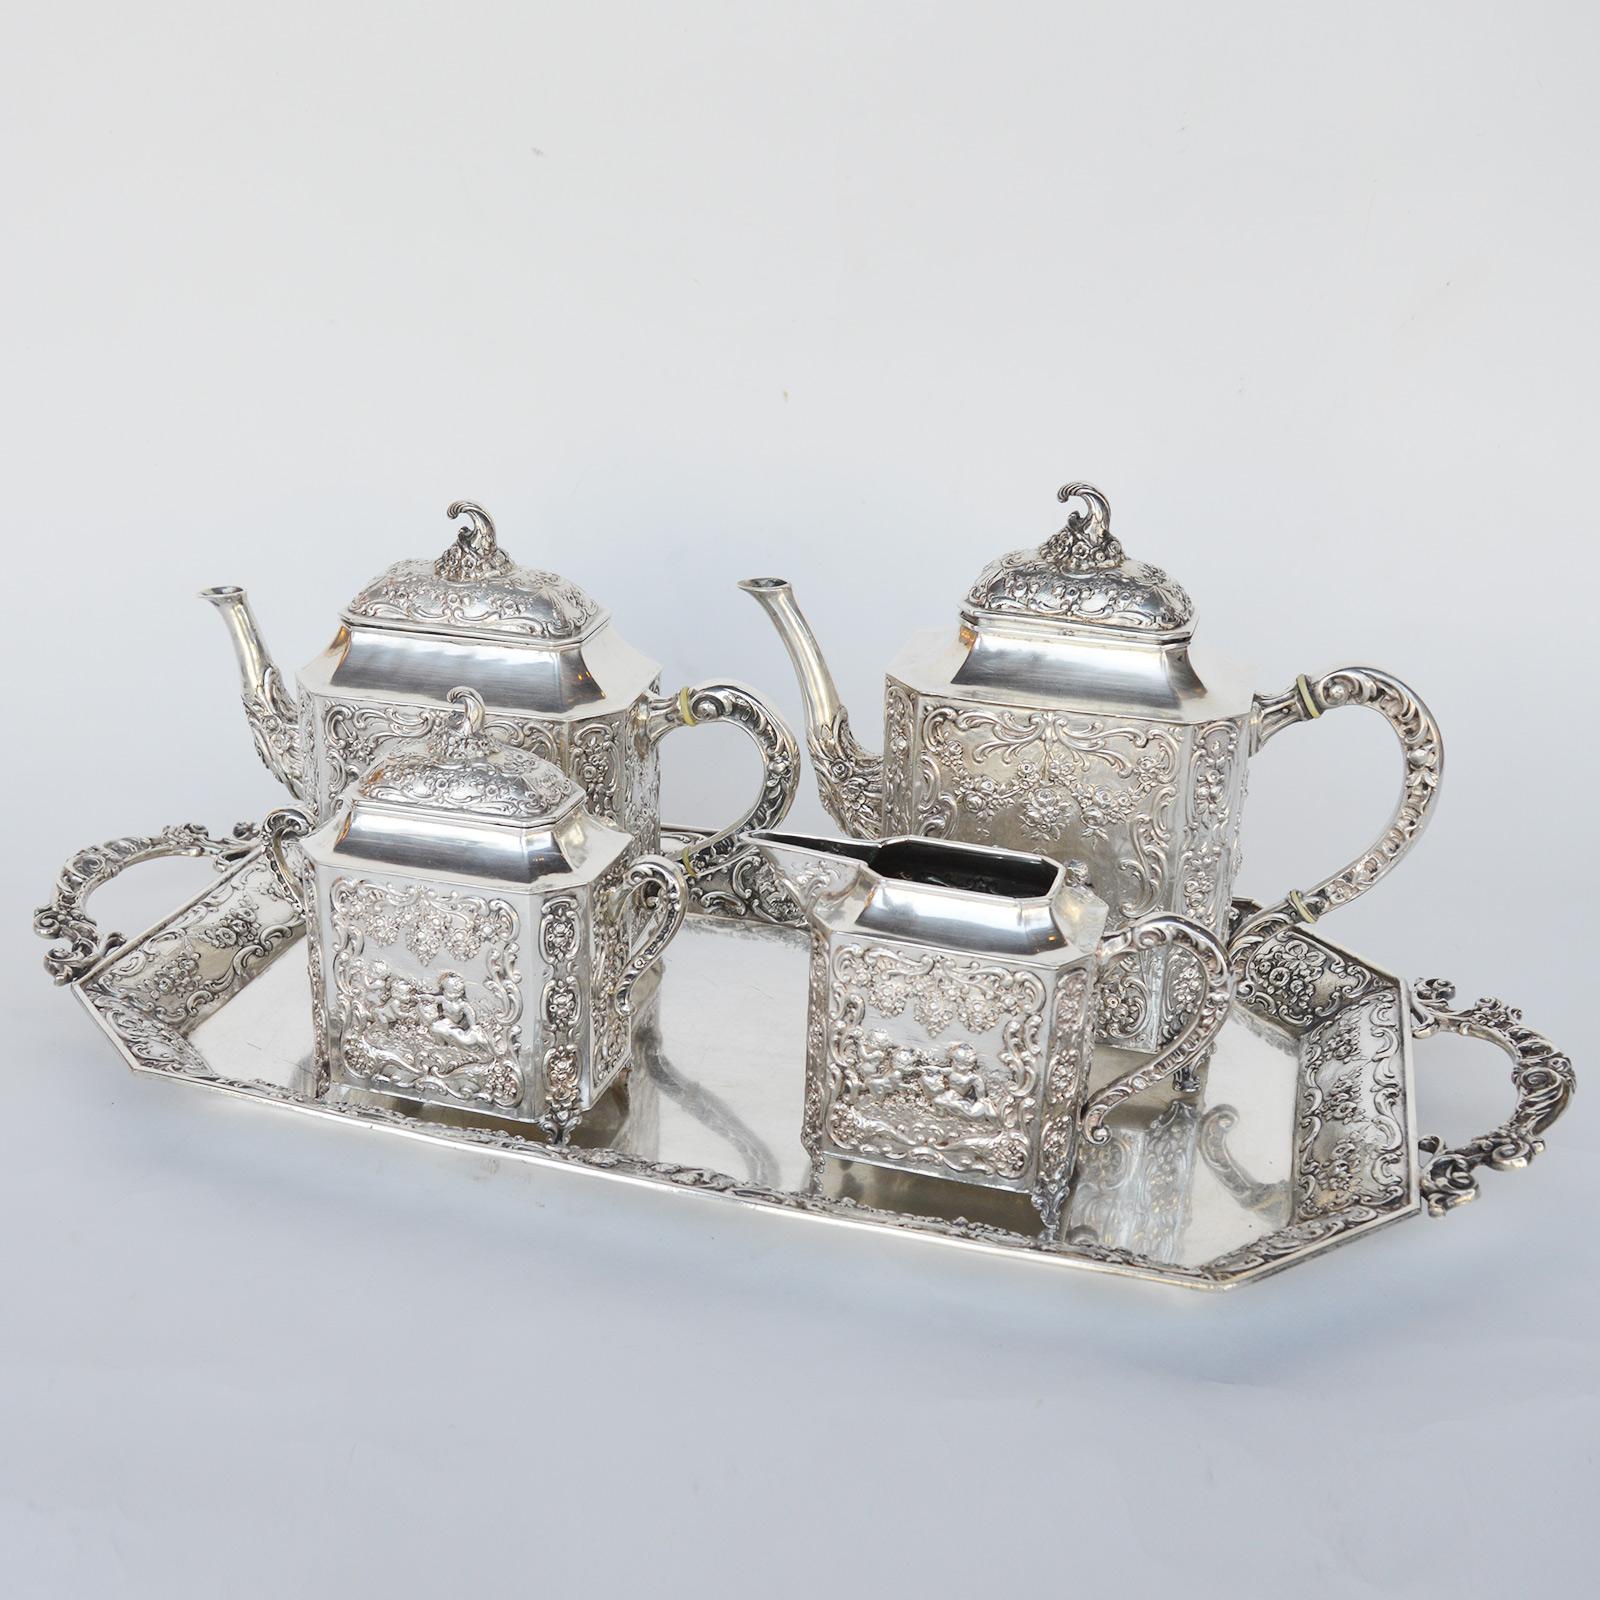 Italian Silver Tea Set Late 19th Century

Dimensions

25 in L x 11.8/5 in W (Tray)

8.5 in H x 11 in W x 3 3/4 in D (Teapot)

11.1 in W x 9.1/2 in H x 3.1/2 in D (coffeepot)

6 .1 in H x 7 in W x 3 in D (Teapot)

4.7 in H x 7 in W x 2.1/2 D (Creamer)